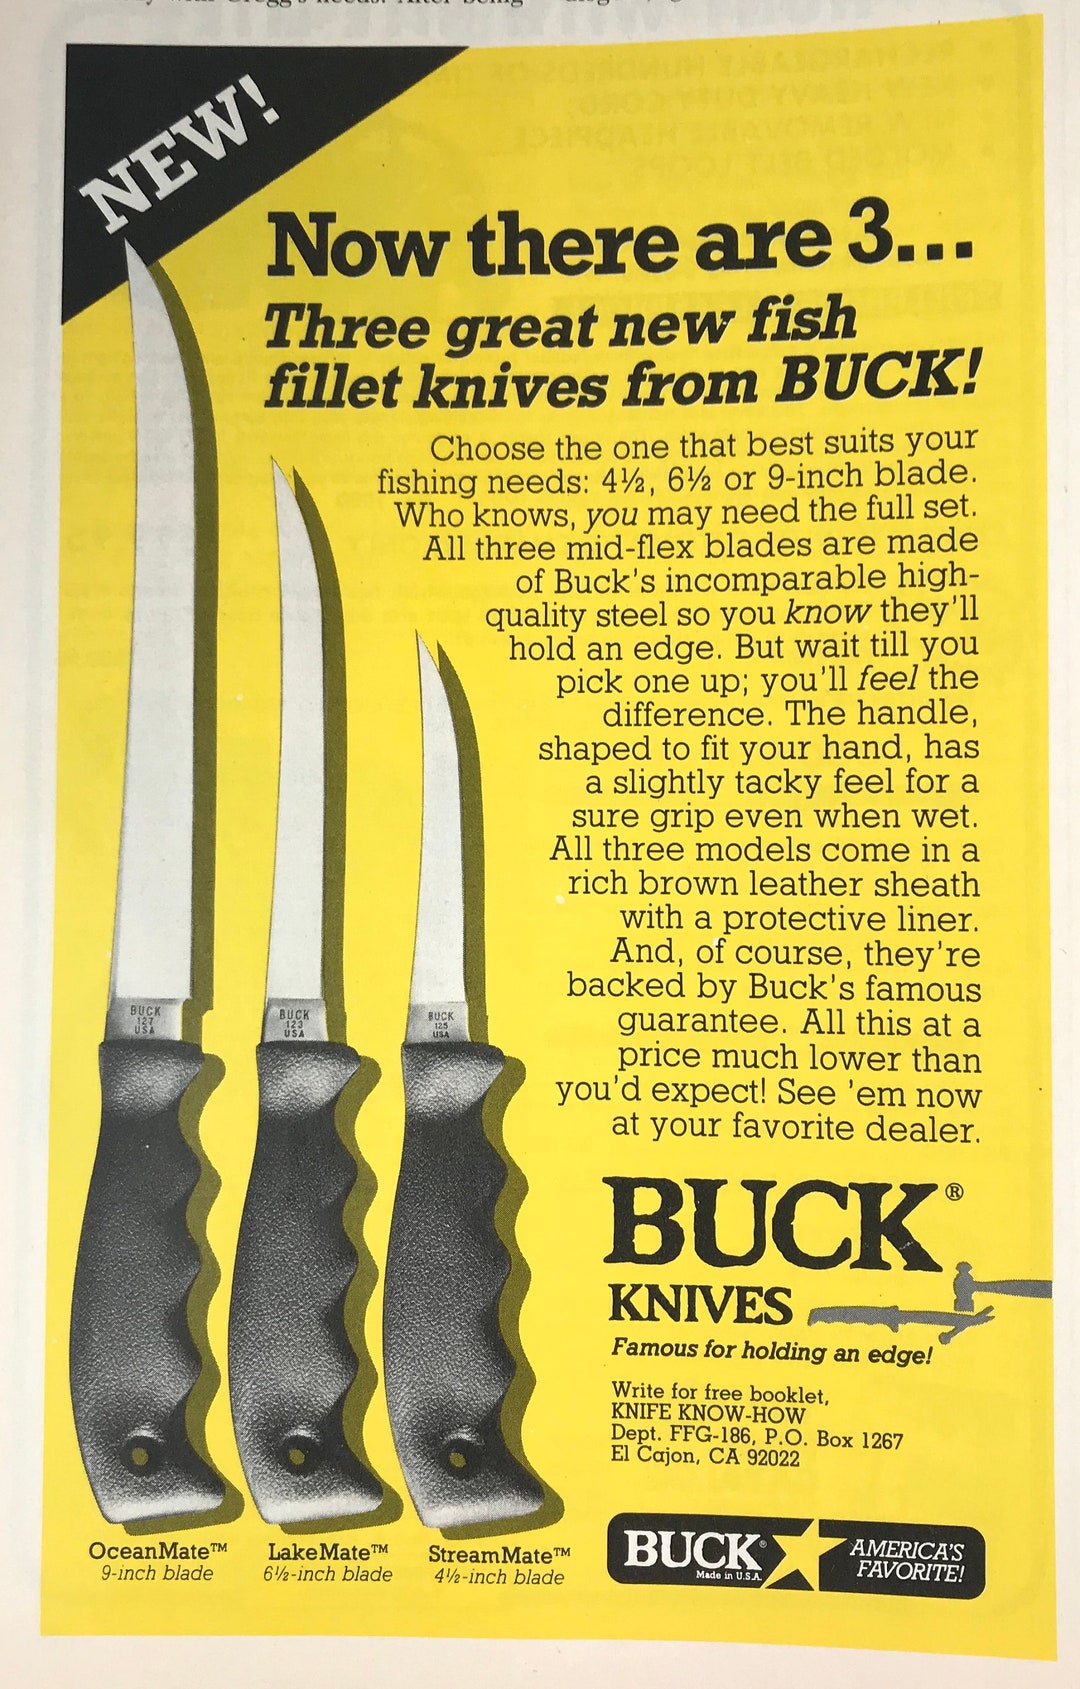 Vtg 1984 Buck Knives Print Ad Oceanmate Lakemate Streammate Now